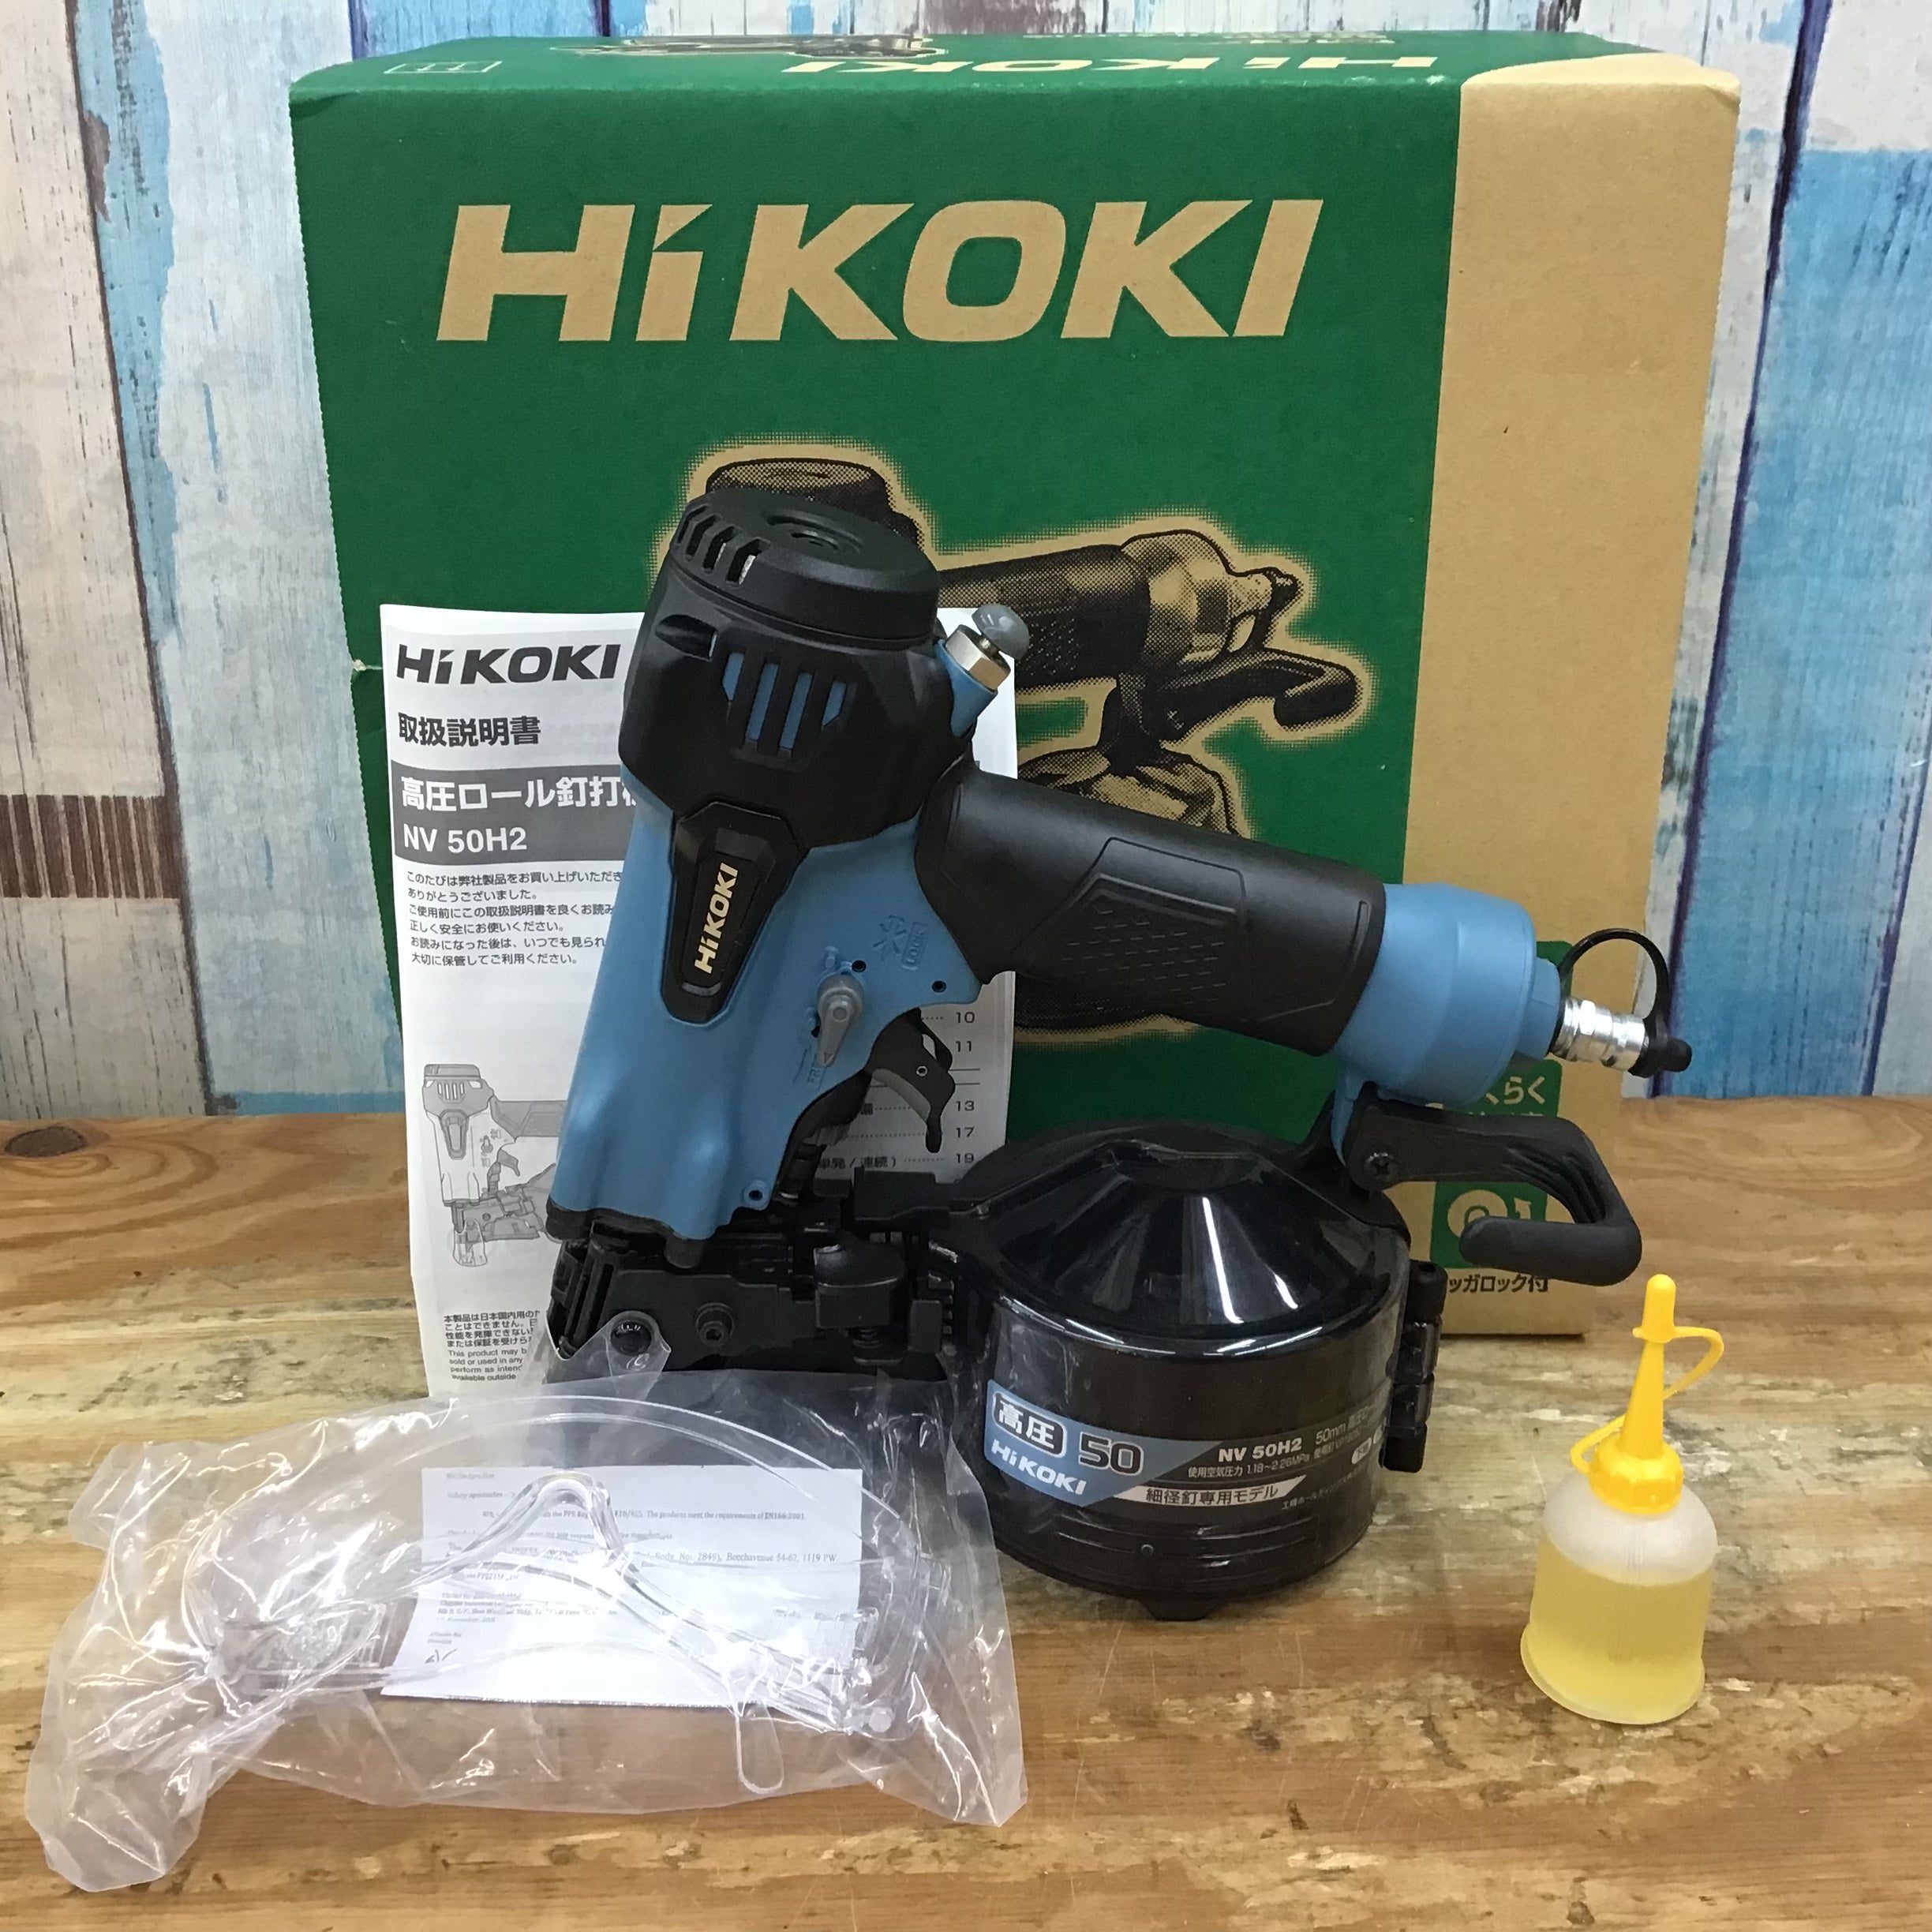 Hi KOKI (日立) 高圧ロール釘打機 NV50H2 新品未使用品 - 自転車